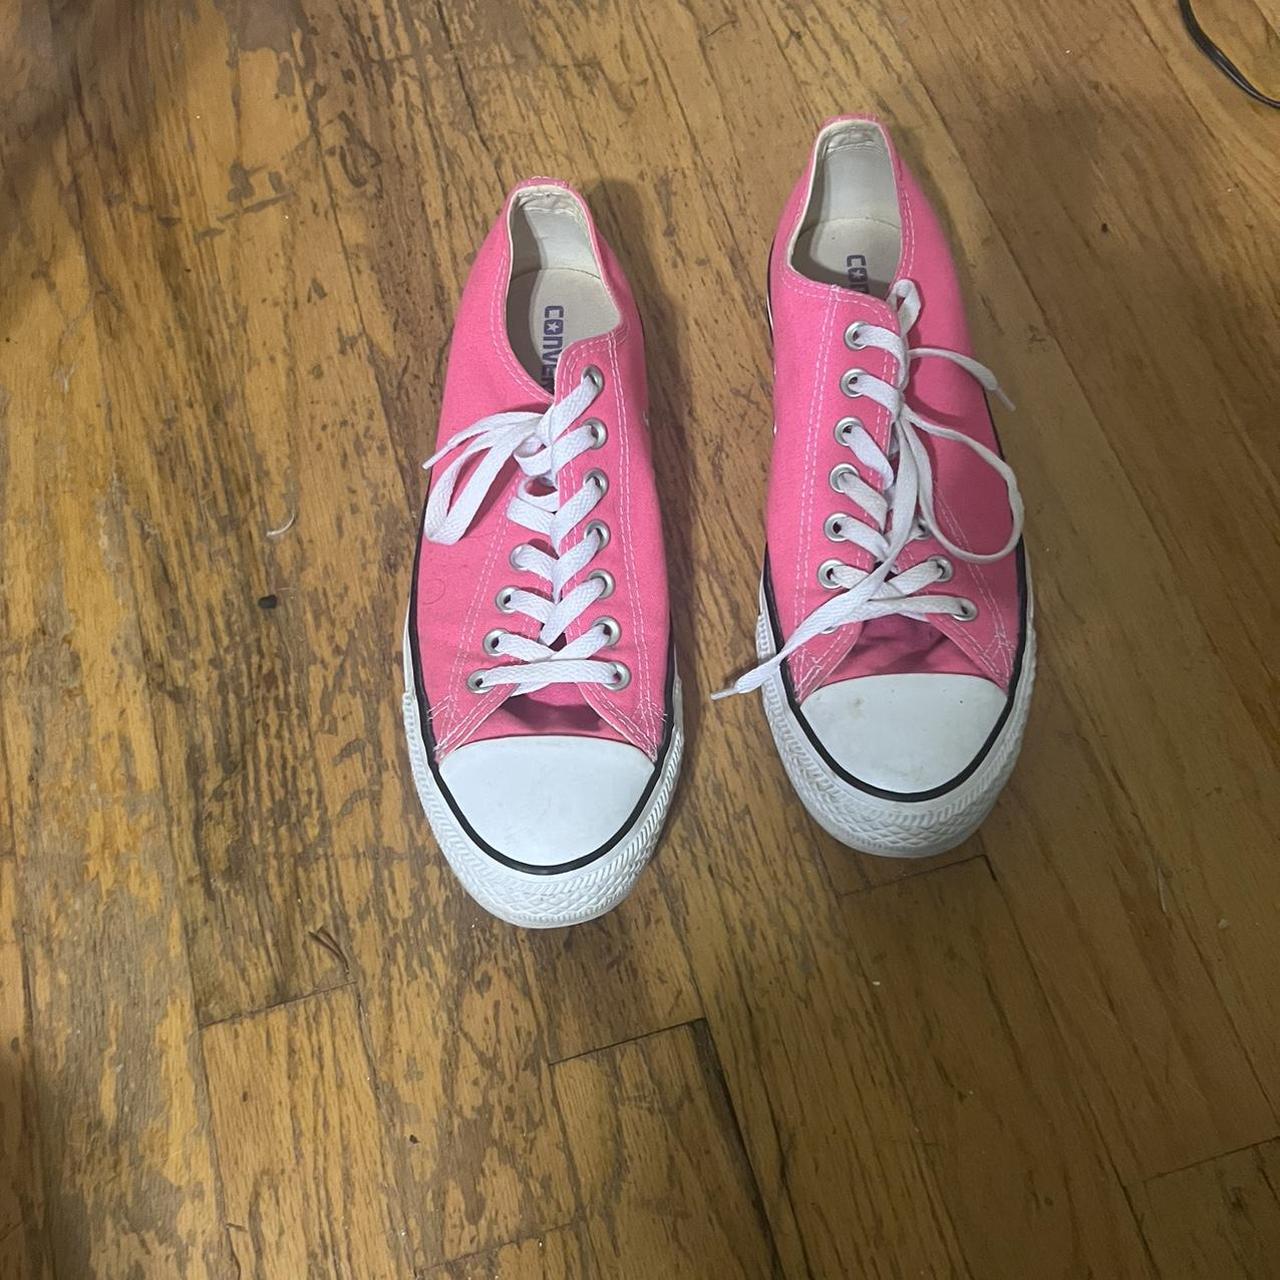 Barely worn womens 11 neon pink converse - Depop